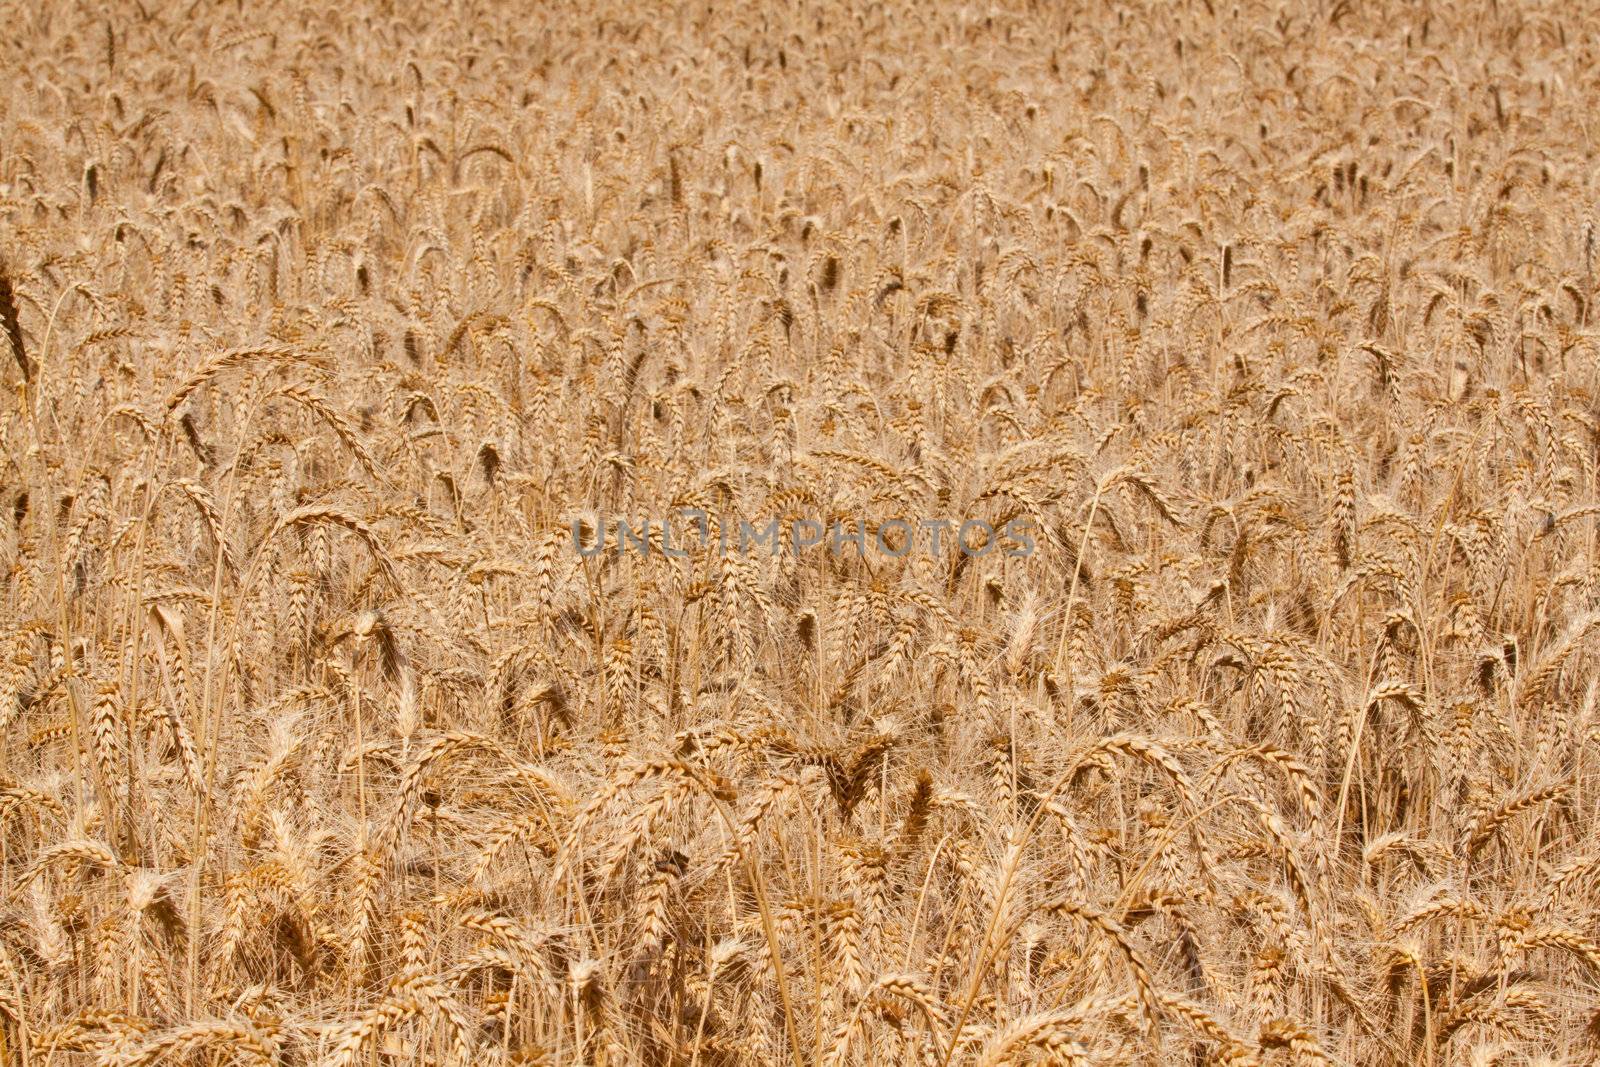 Wheat Field by joshuaraineyphotography